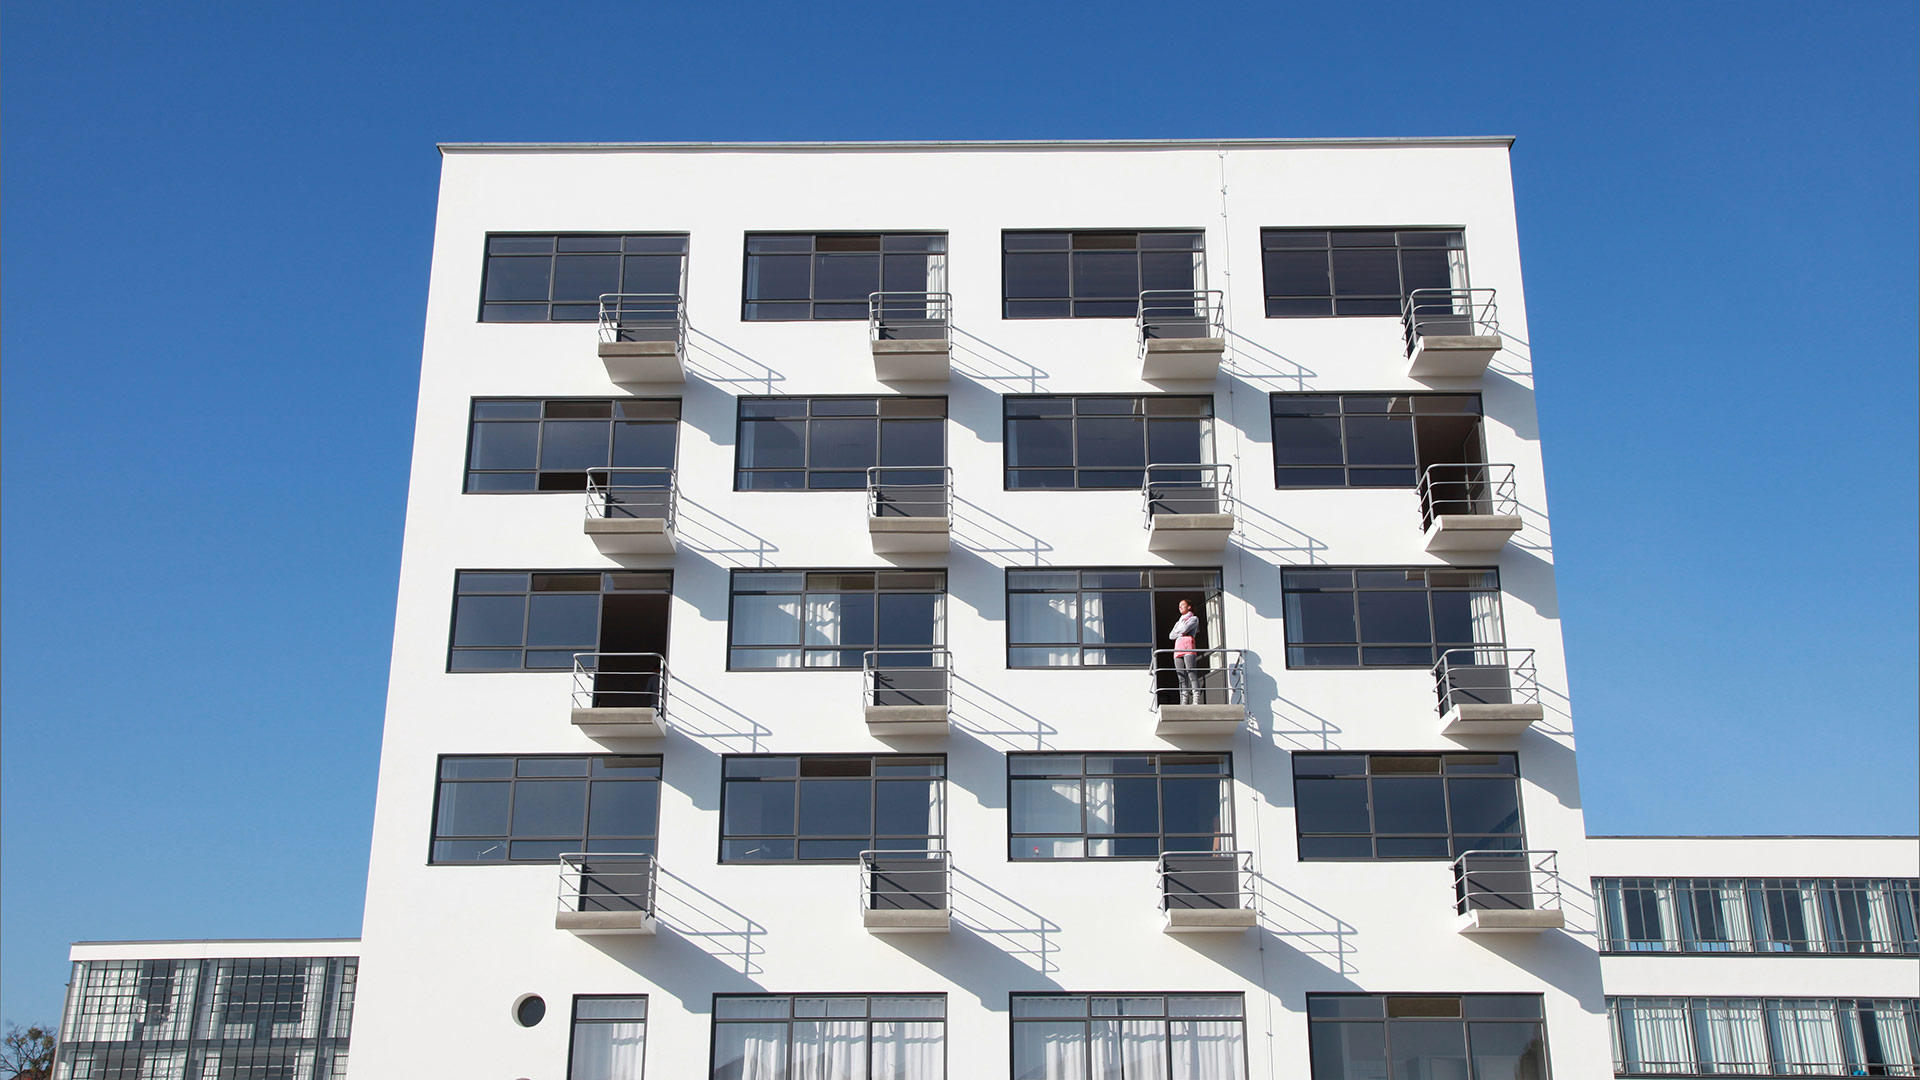 Bauhaus Dessau Atelier building with steel windows